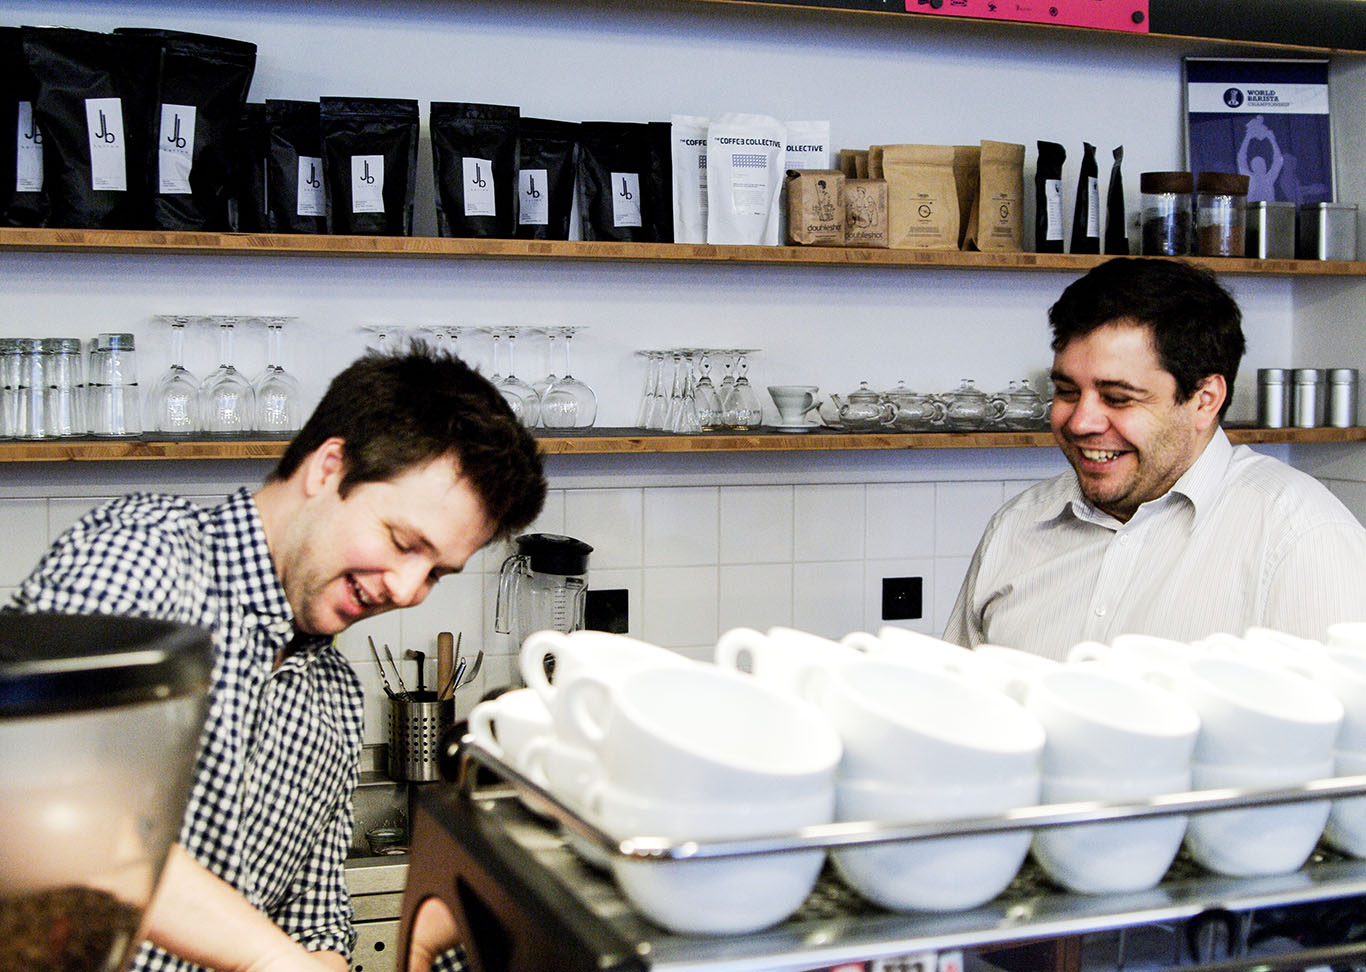 EMA's head barista Adam Neubauer, on the left, prepares an espresso as owner Kamil Skrbek. (Photos: Jaroslav Slamecka.)